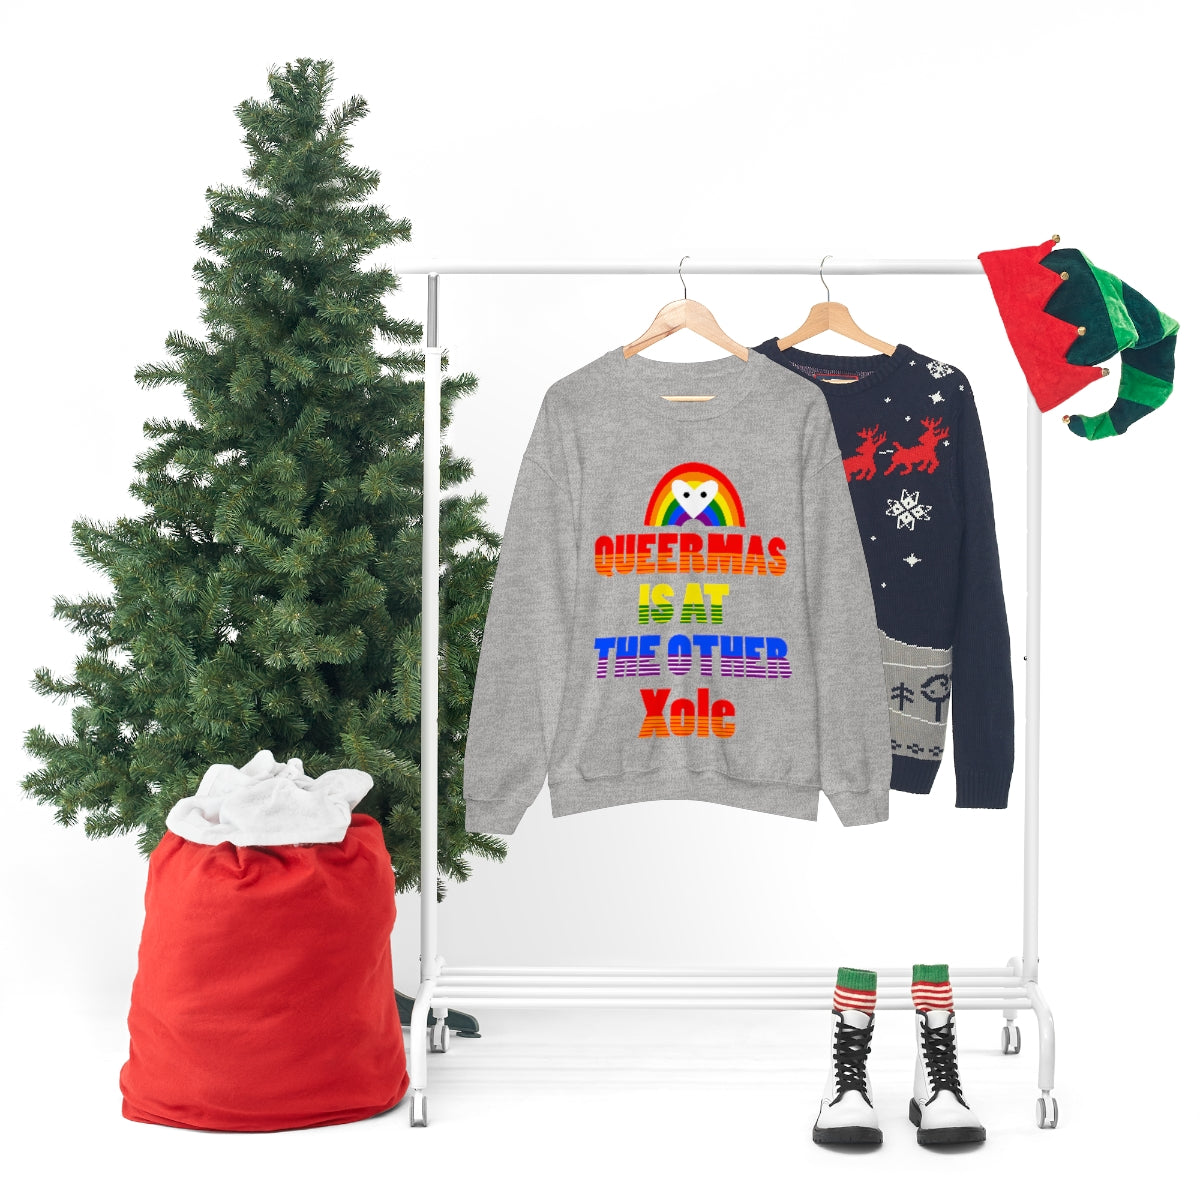 Unisex Christmas LGBTQ Heavy Blend Crewneck Sweatshirt - Queermas Is At The Other Xole Printify